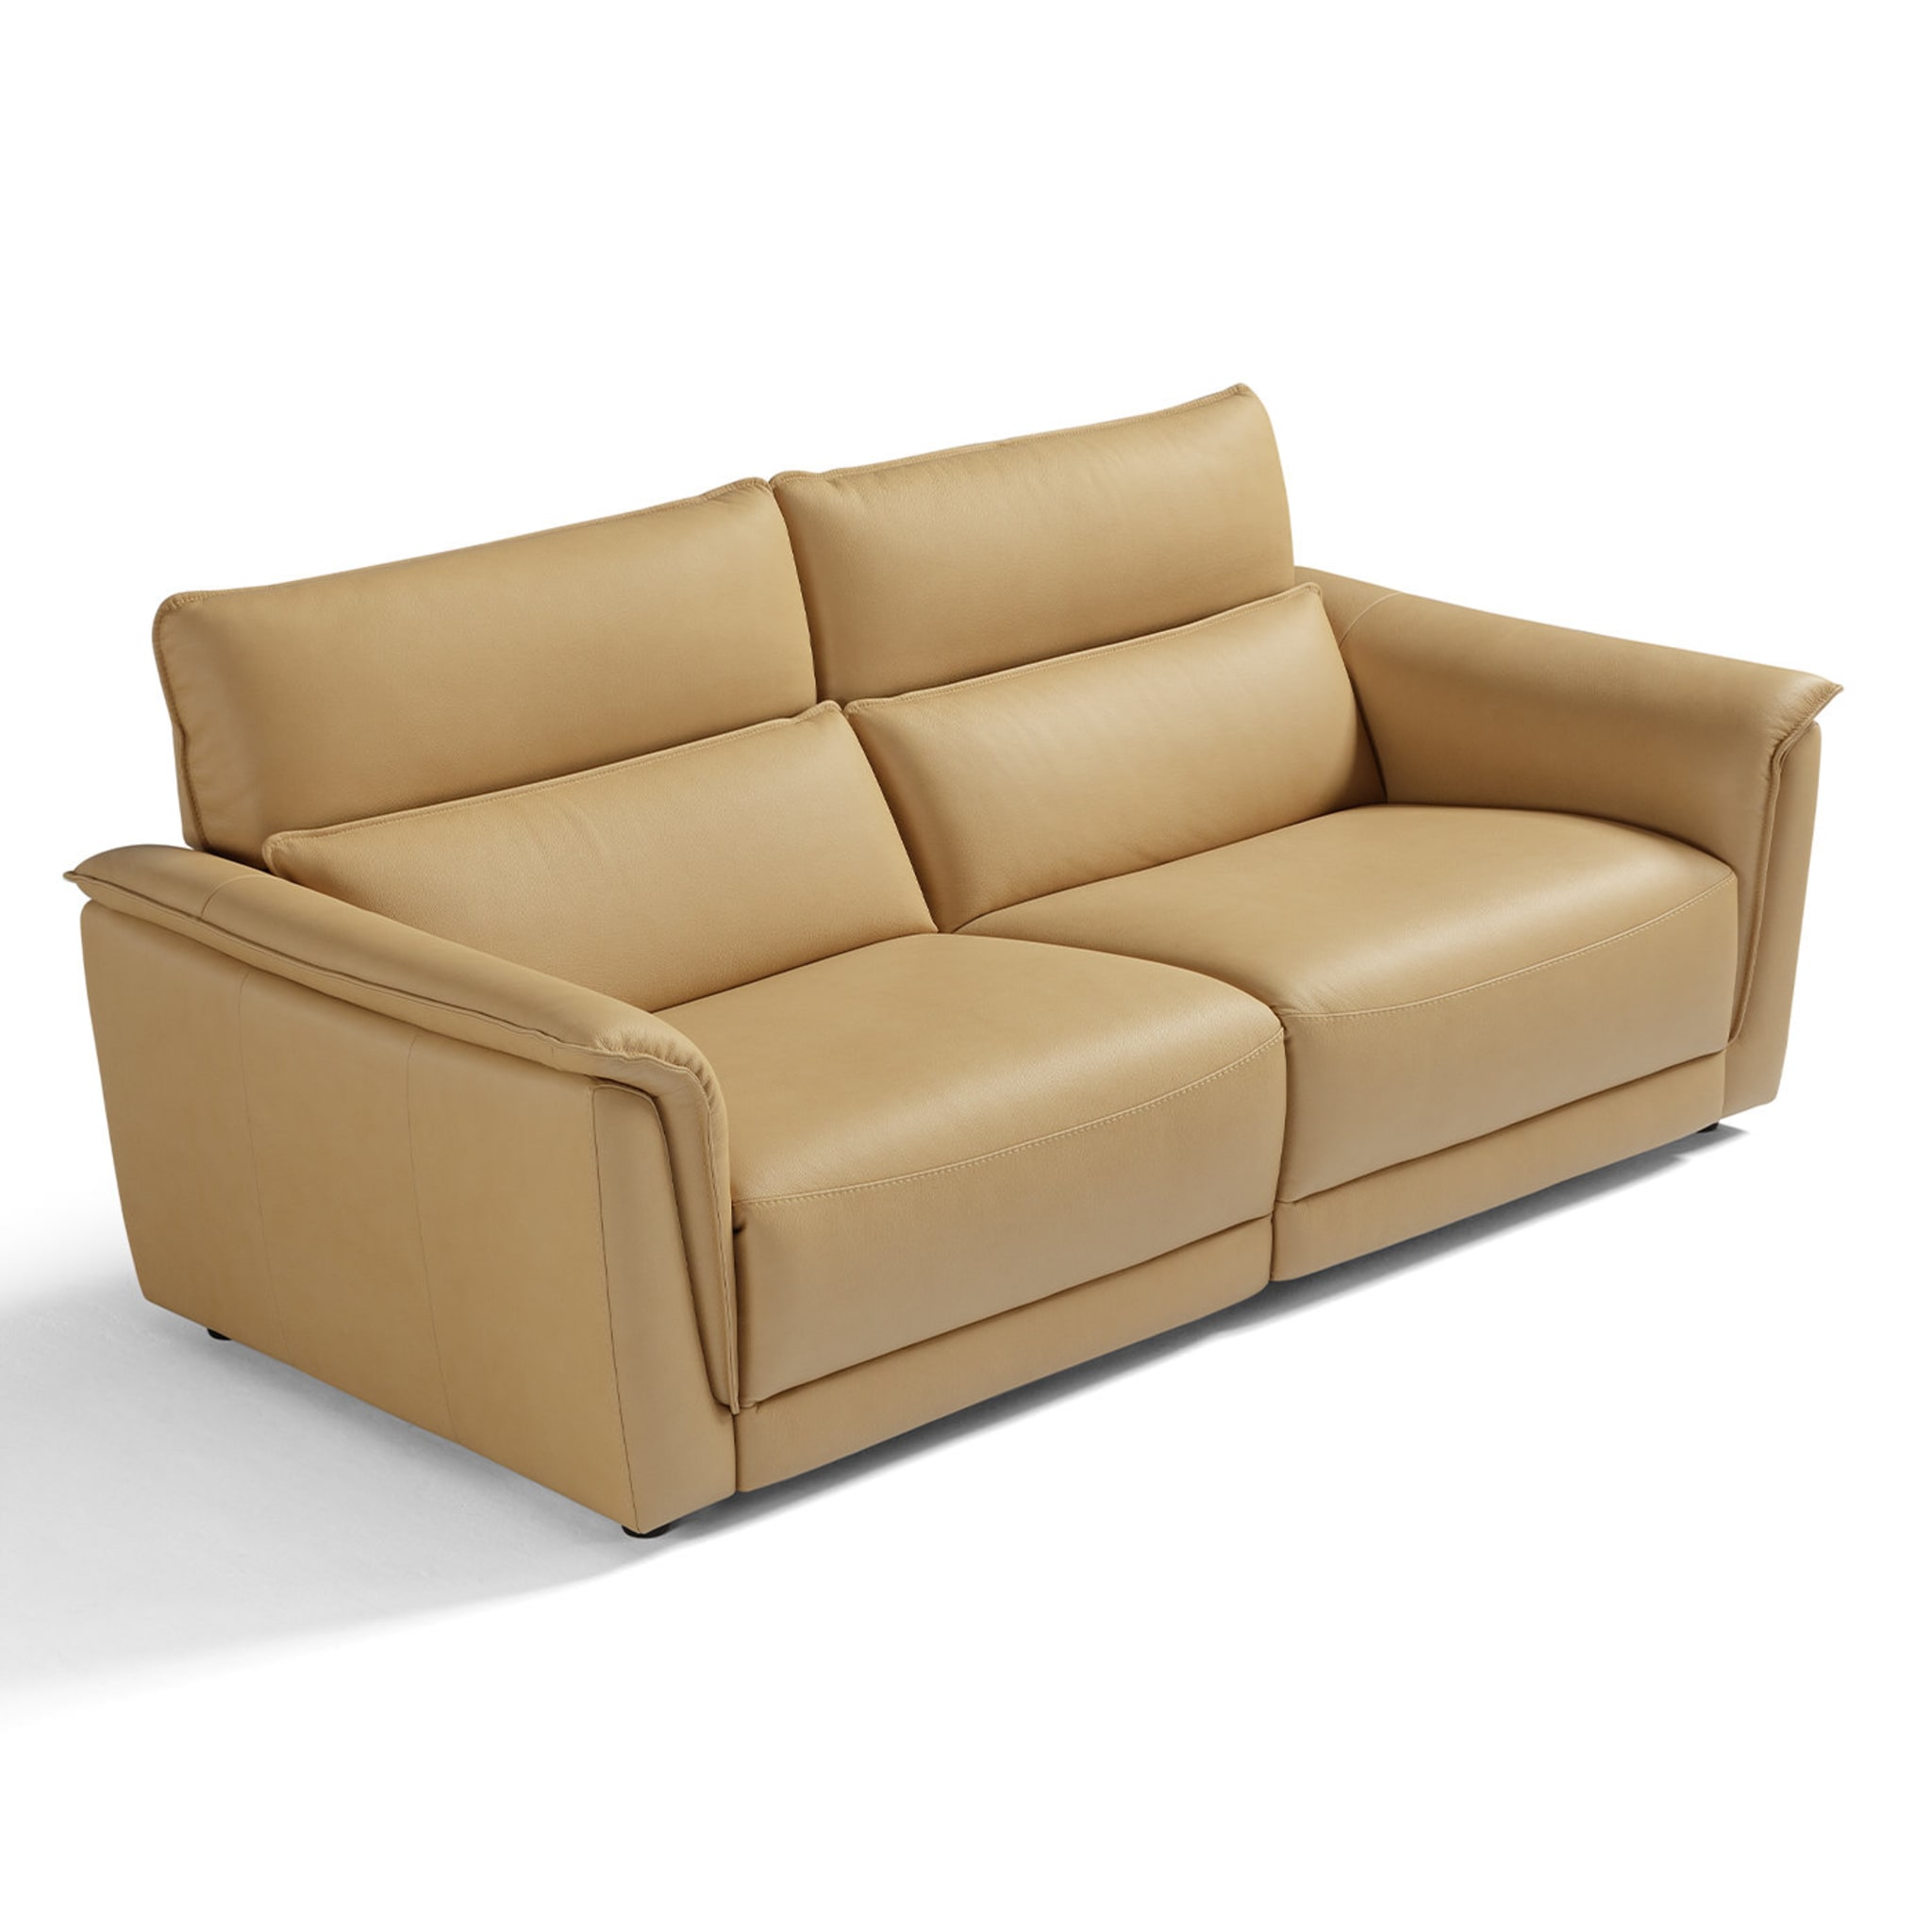 Bovino Sand Leather 2-Seater Armchair - Alternative view 4